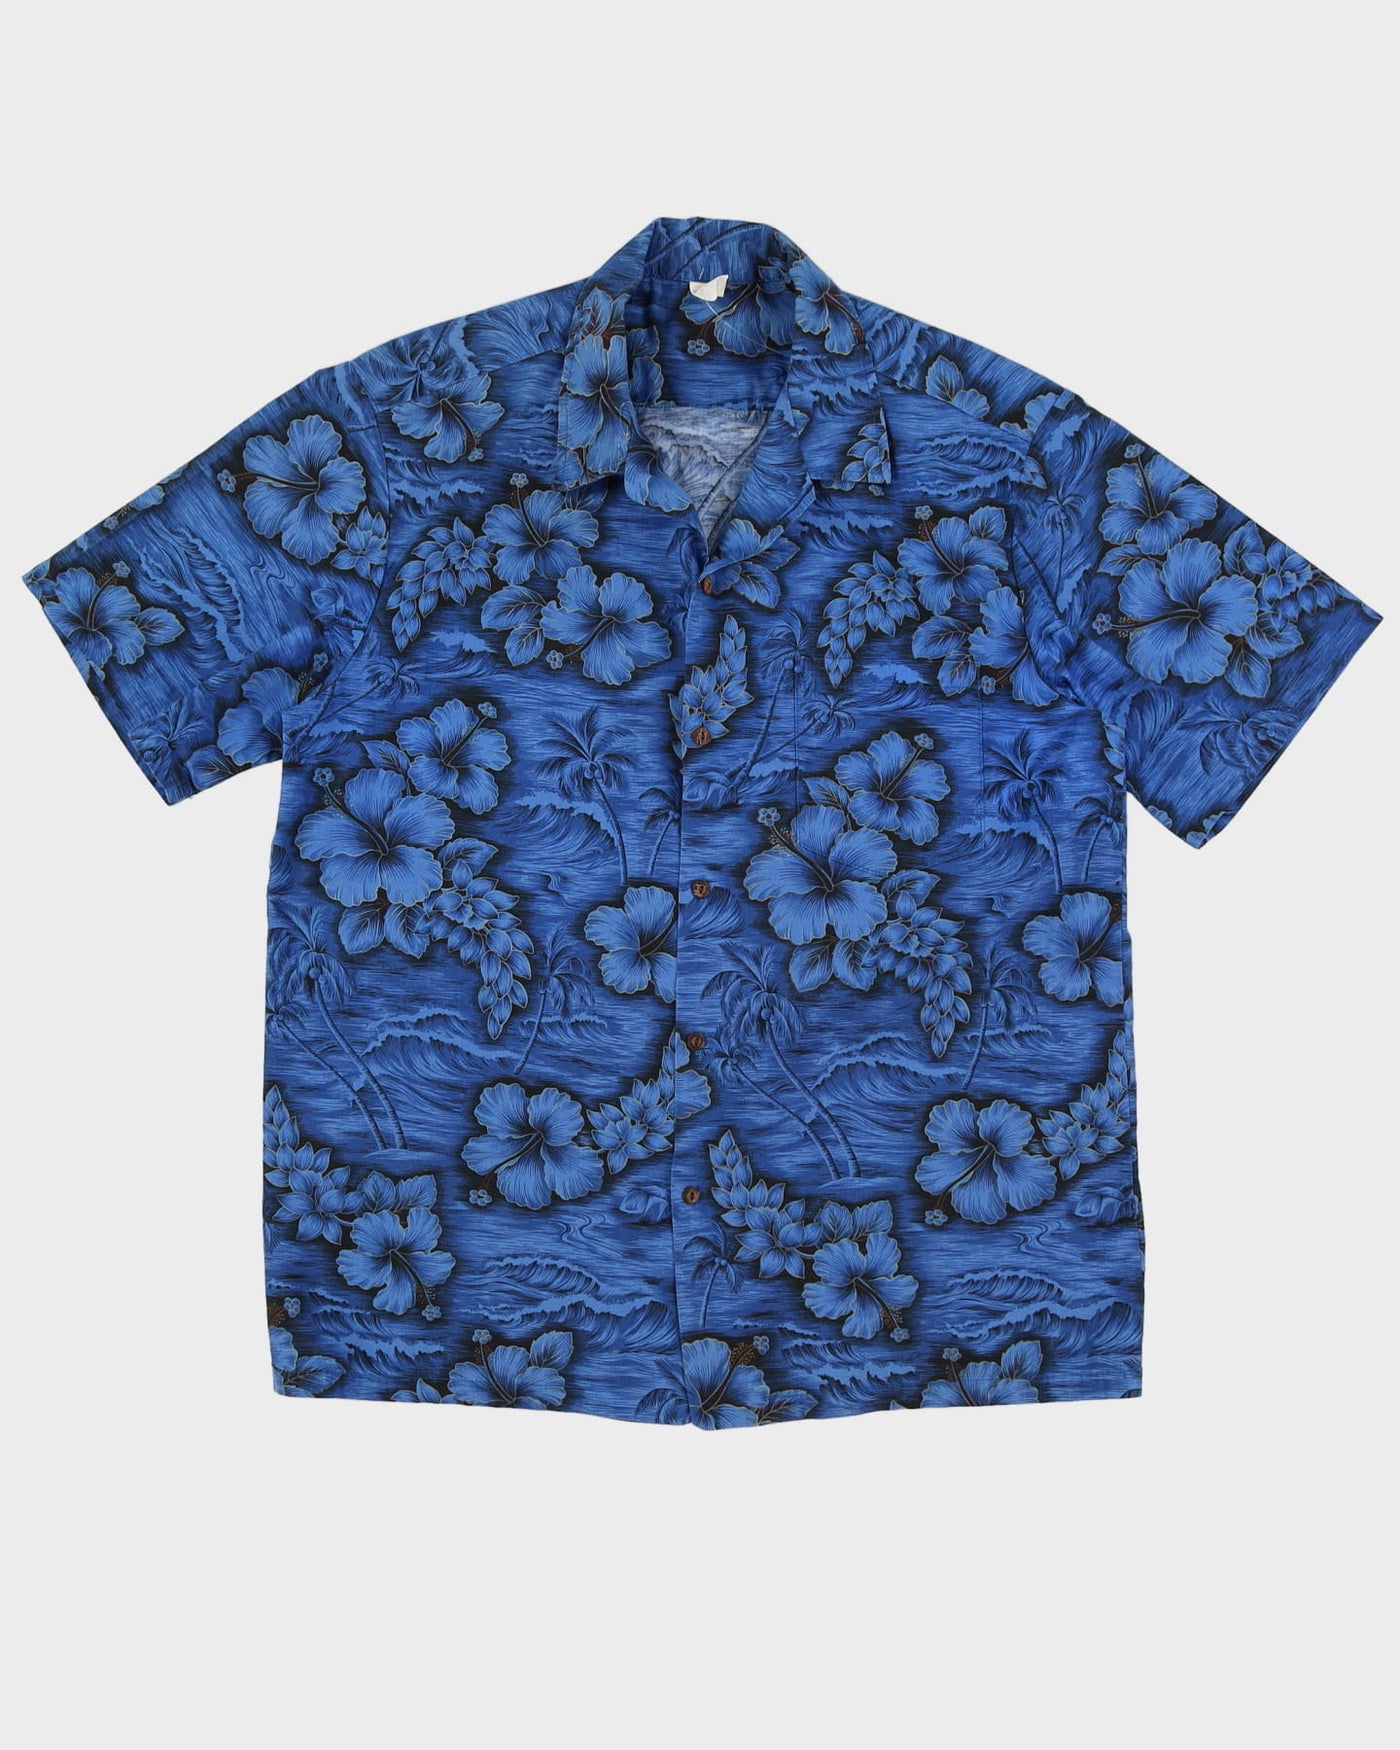 Vintage 1990s Blue Cotton Patterned Hawaiian Shirt - XXL